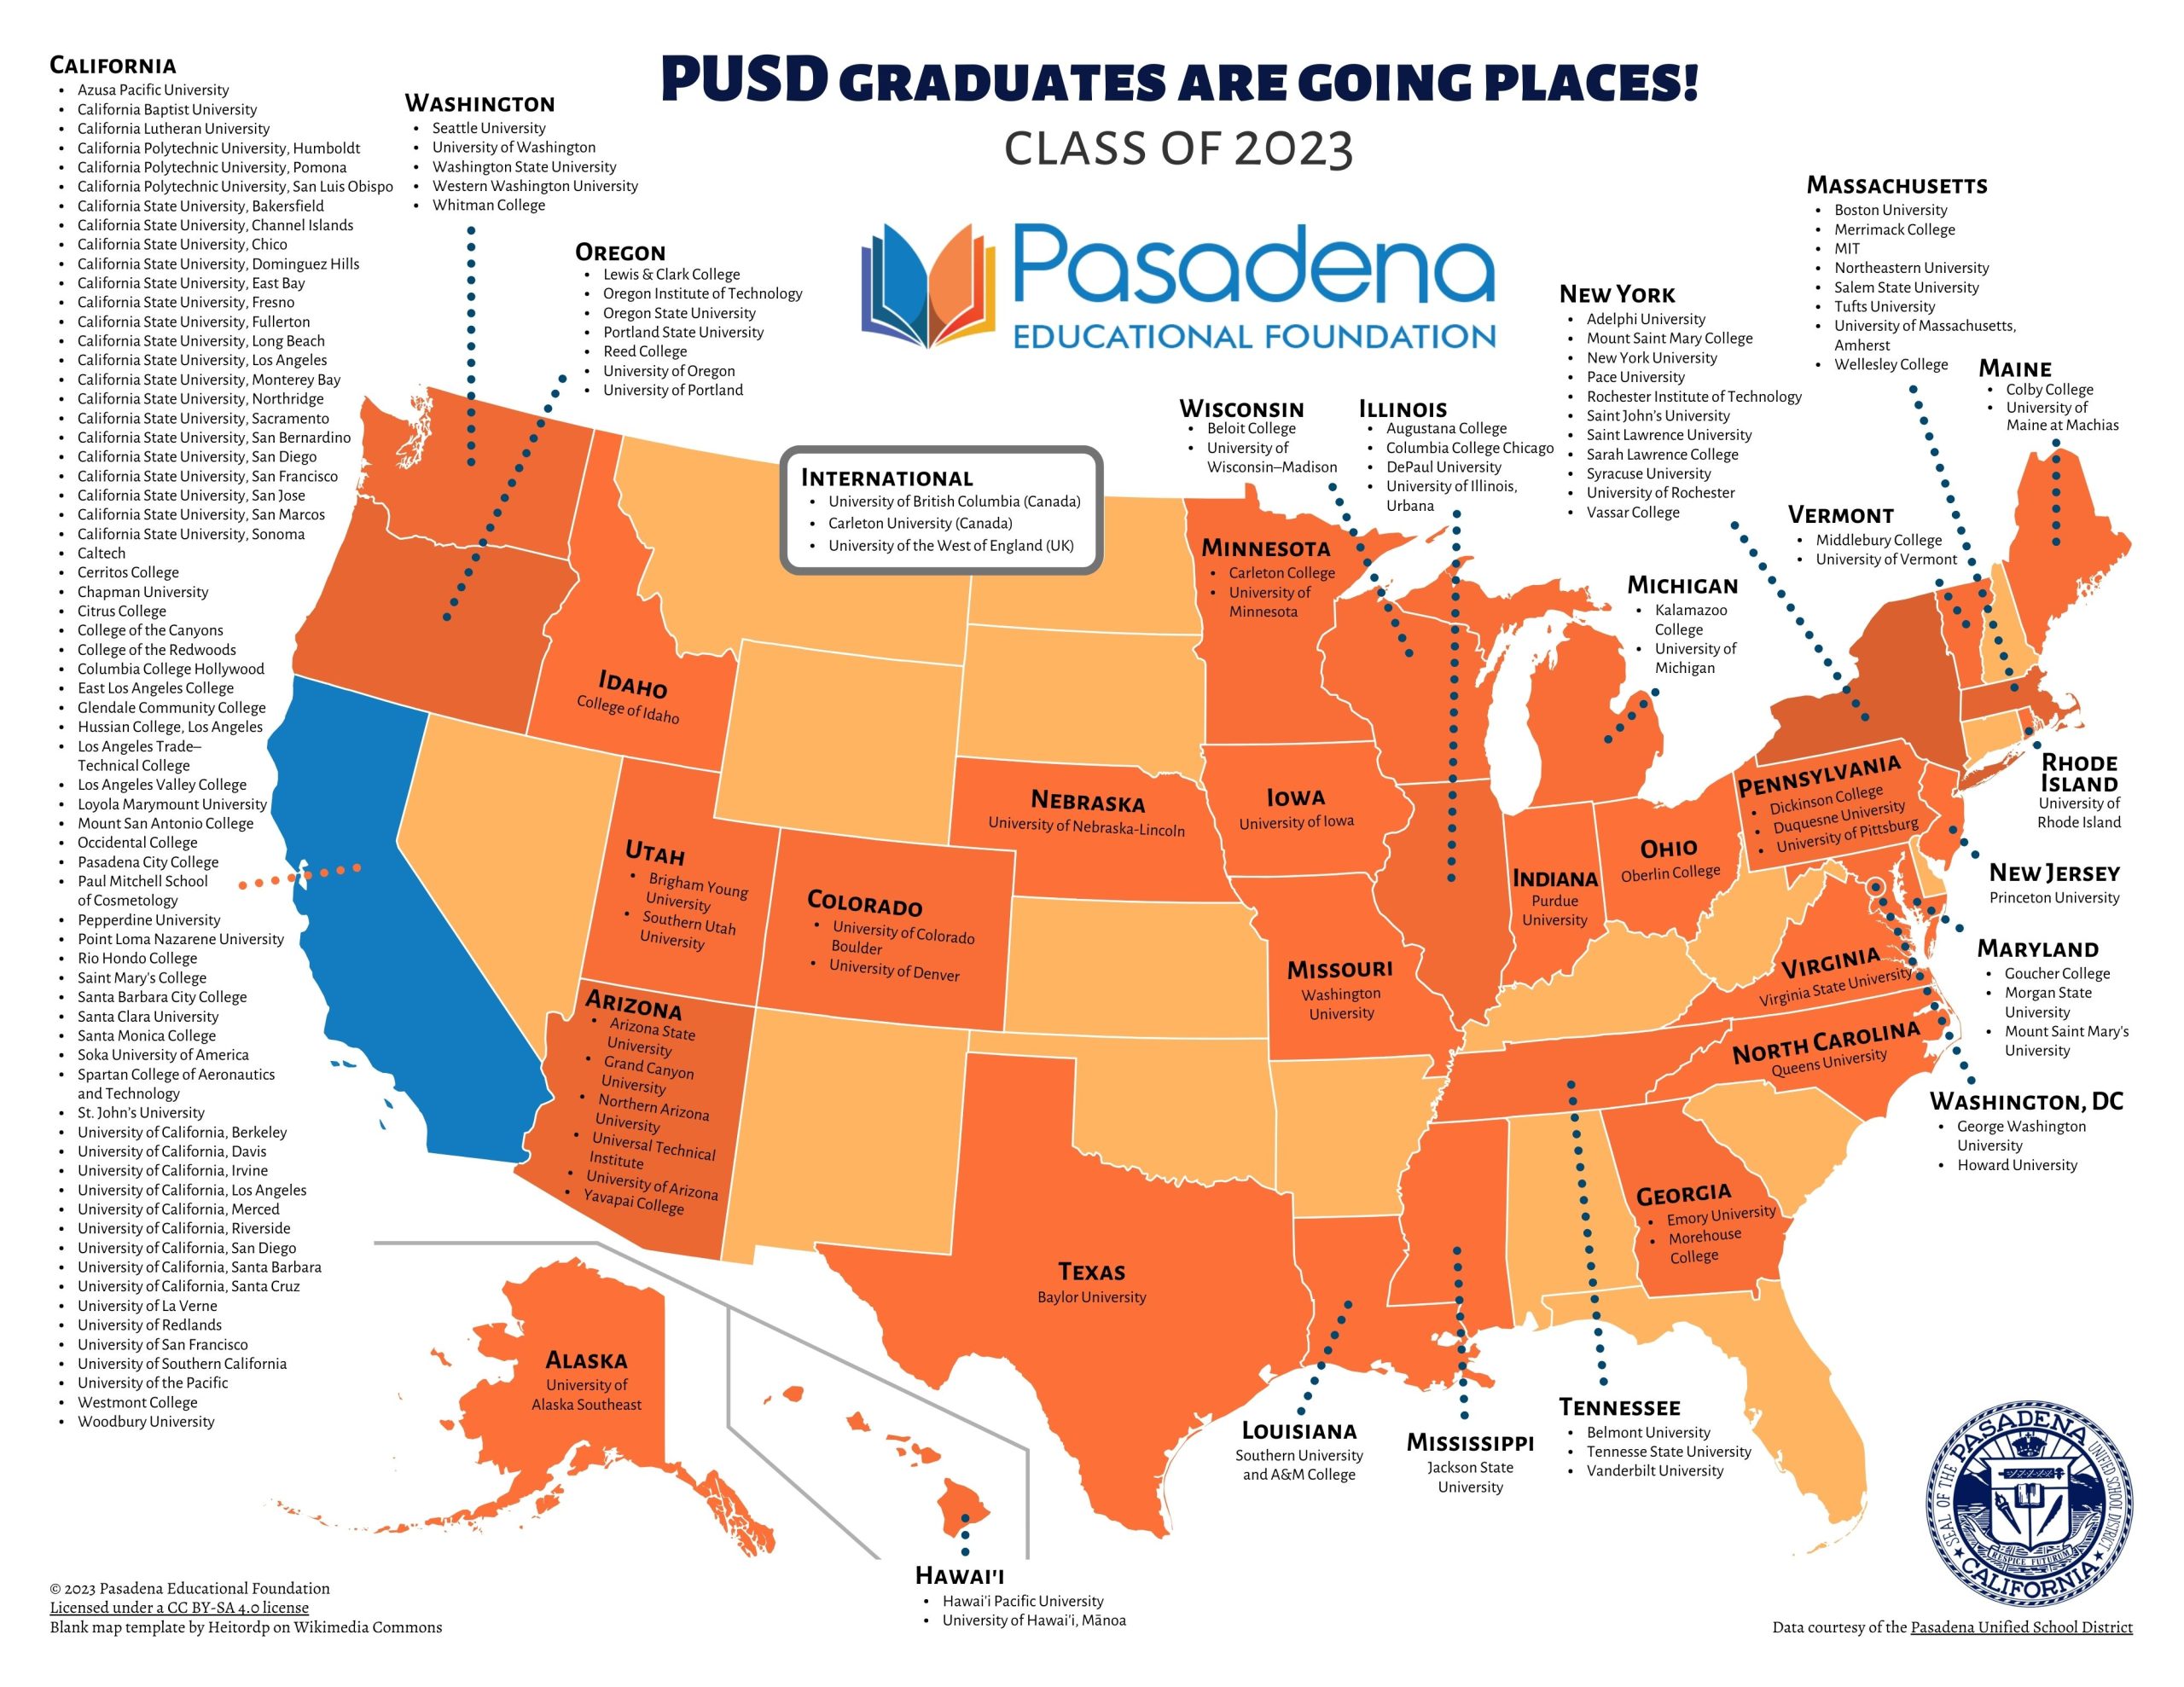 PUSD Graduate Destinations 2023